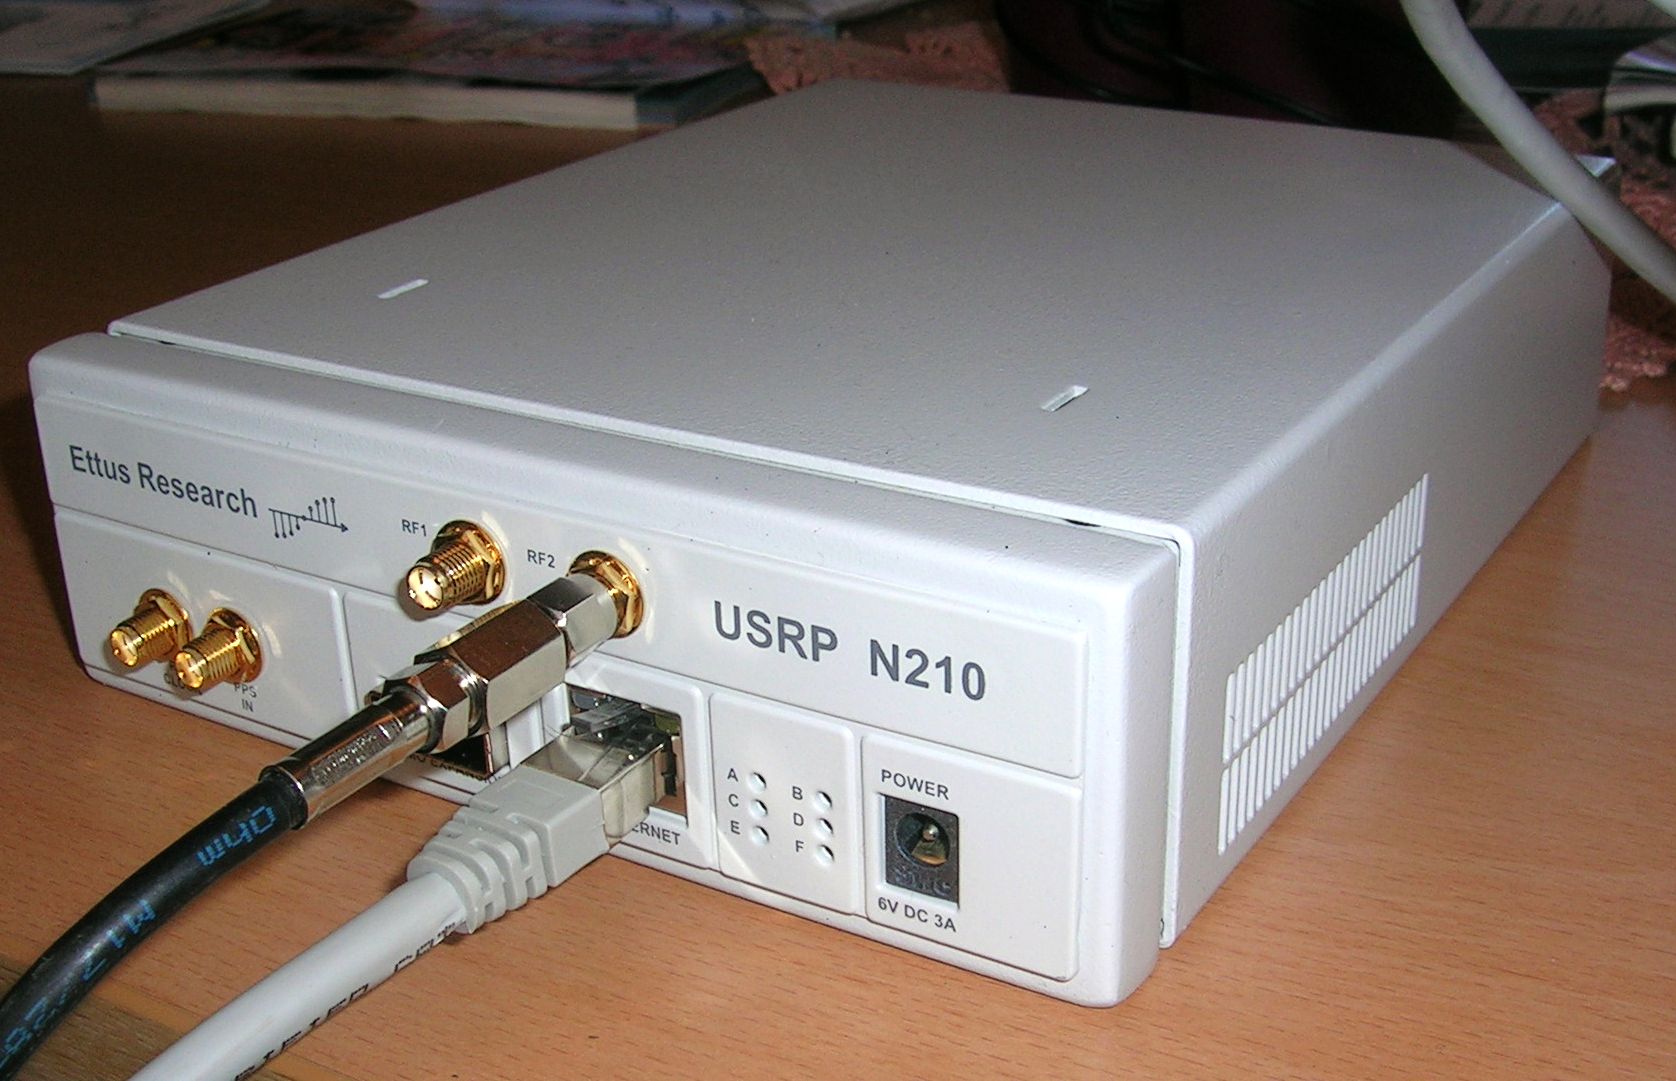 URSP N210 SDR TRX